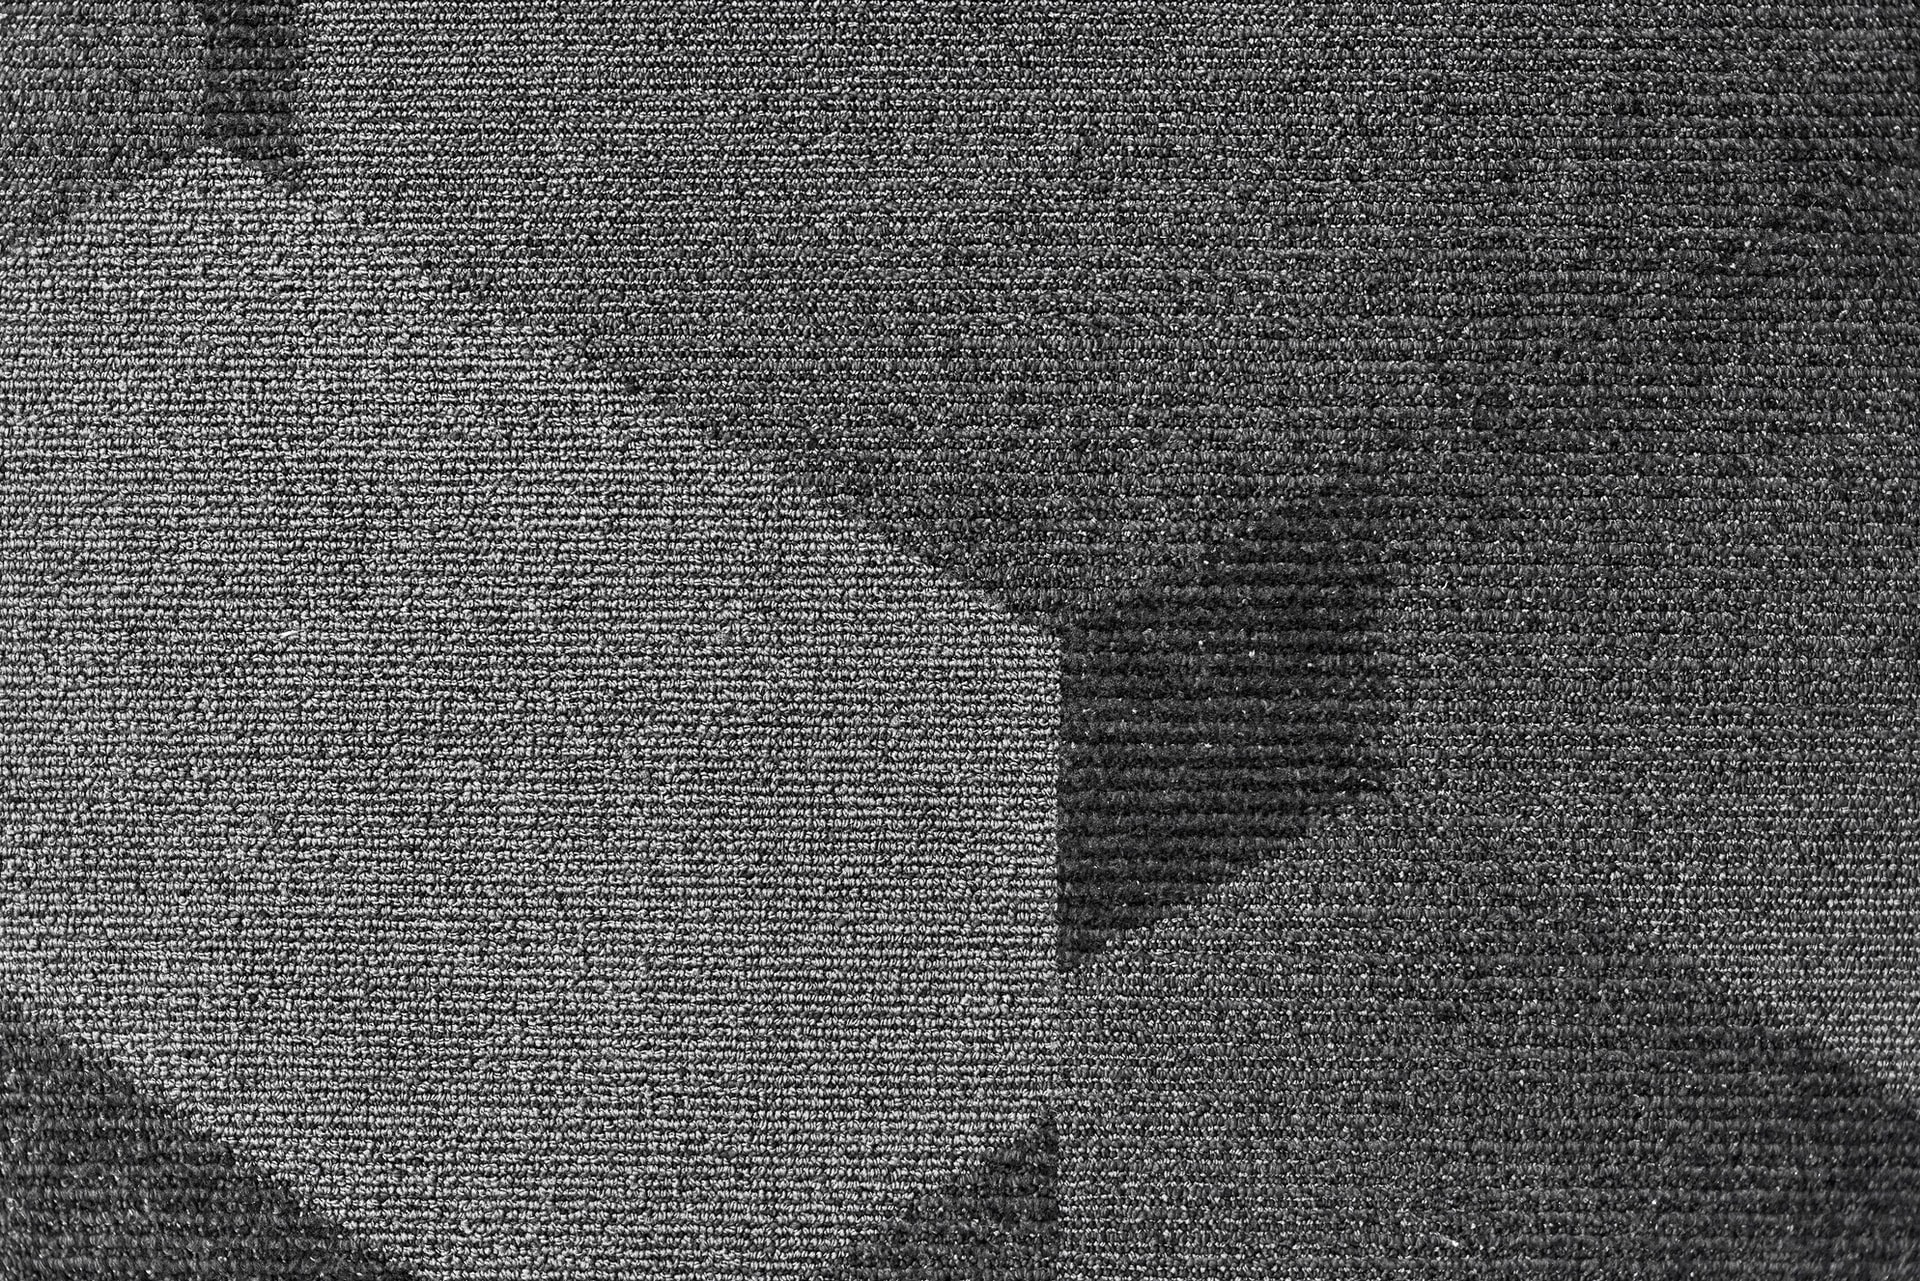 A black and gray carpet